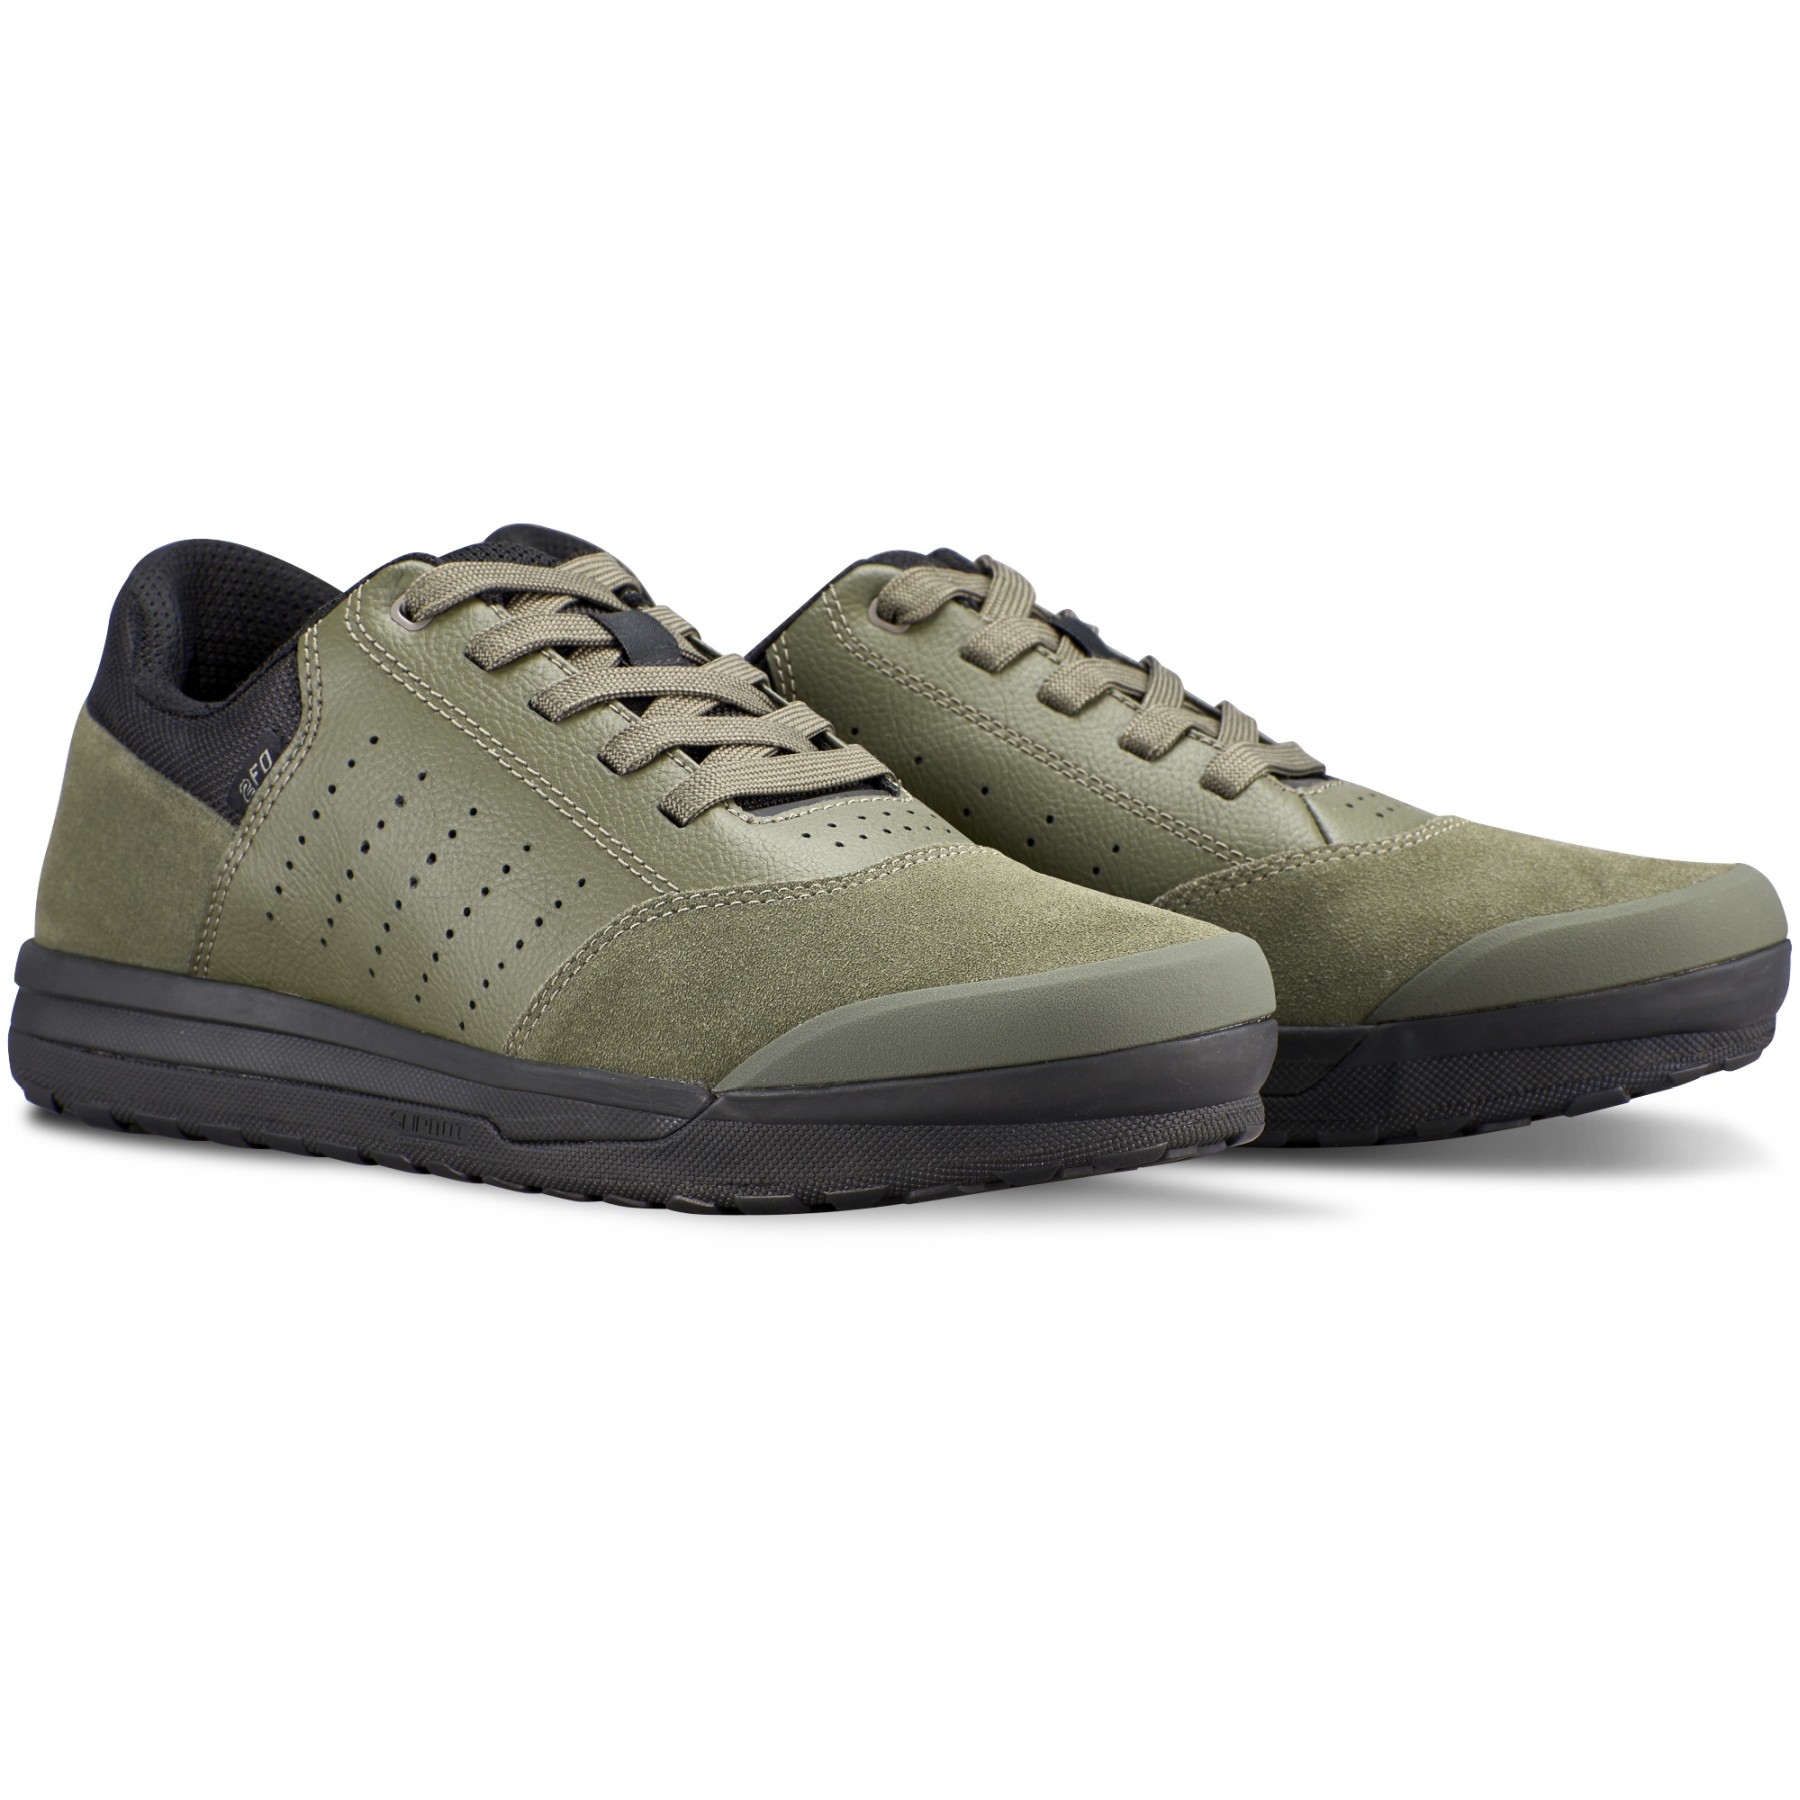 Produktbild von Specialized 2FO Roost Flat MTB Schuhe Herren - Oak Green/Black